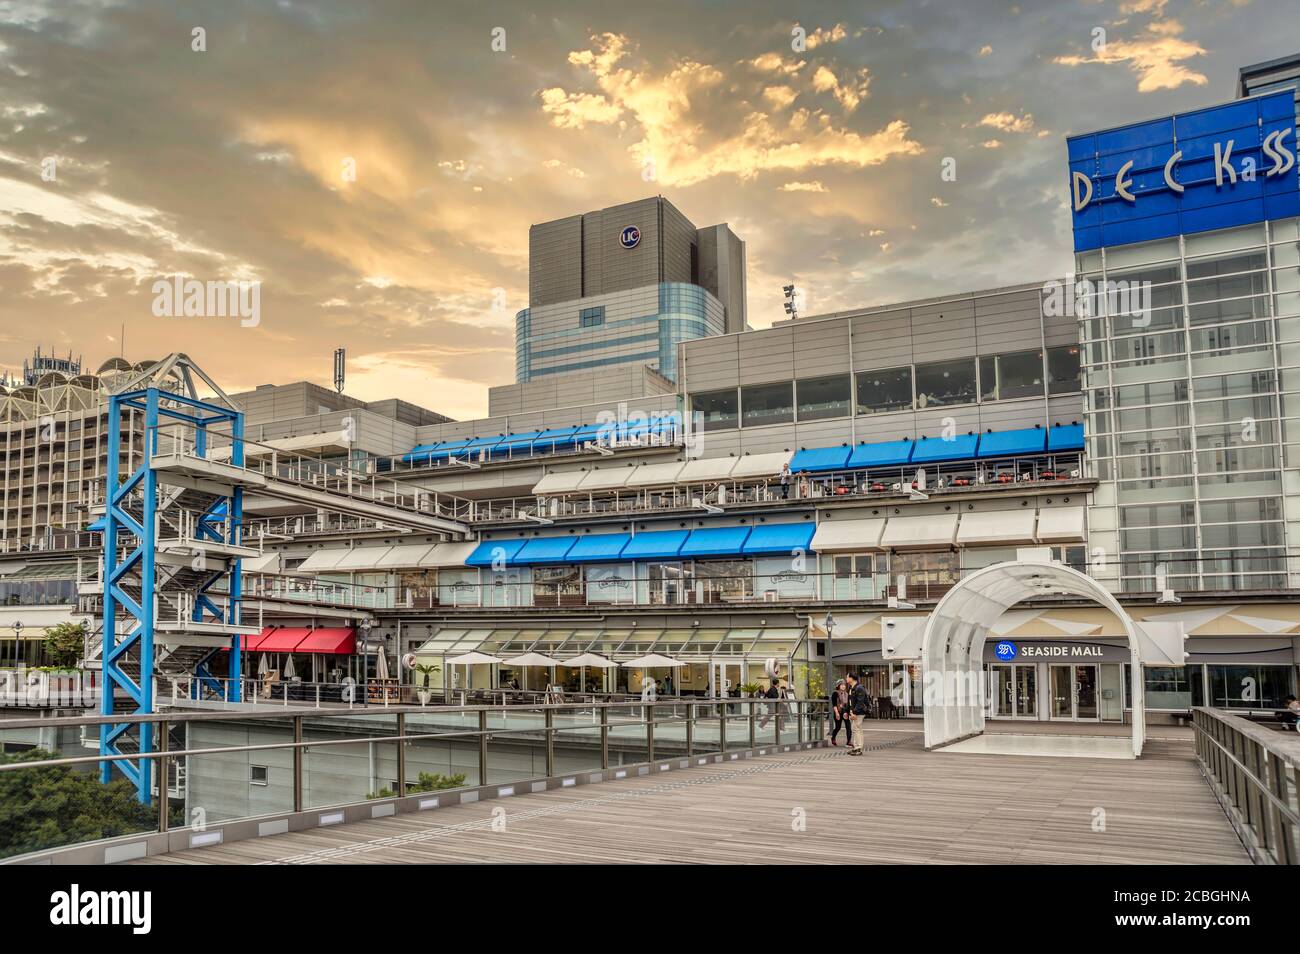 Decks Seaside Mall shopping center and entertainment area in Odaiba, Minato, Tokyo, Japan Stock Photo